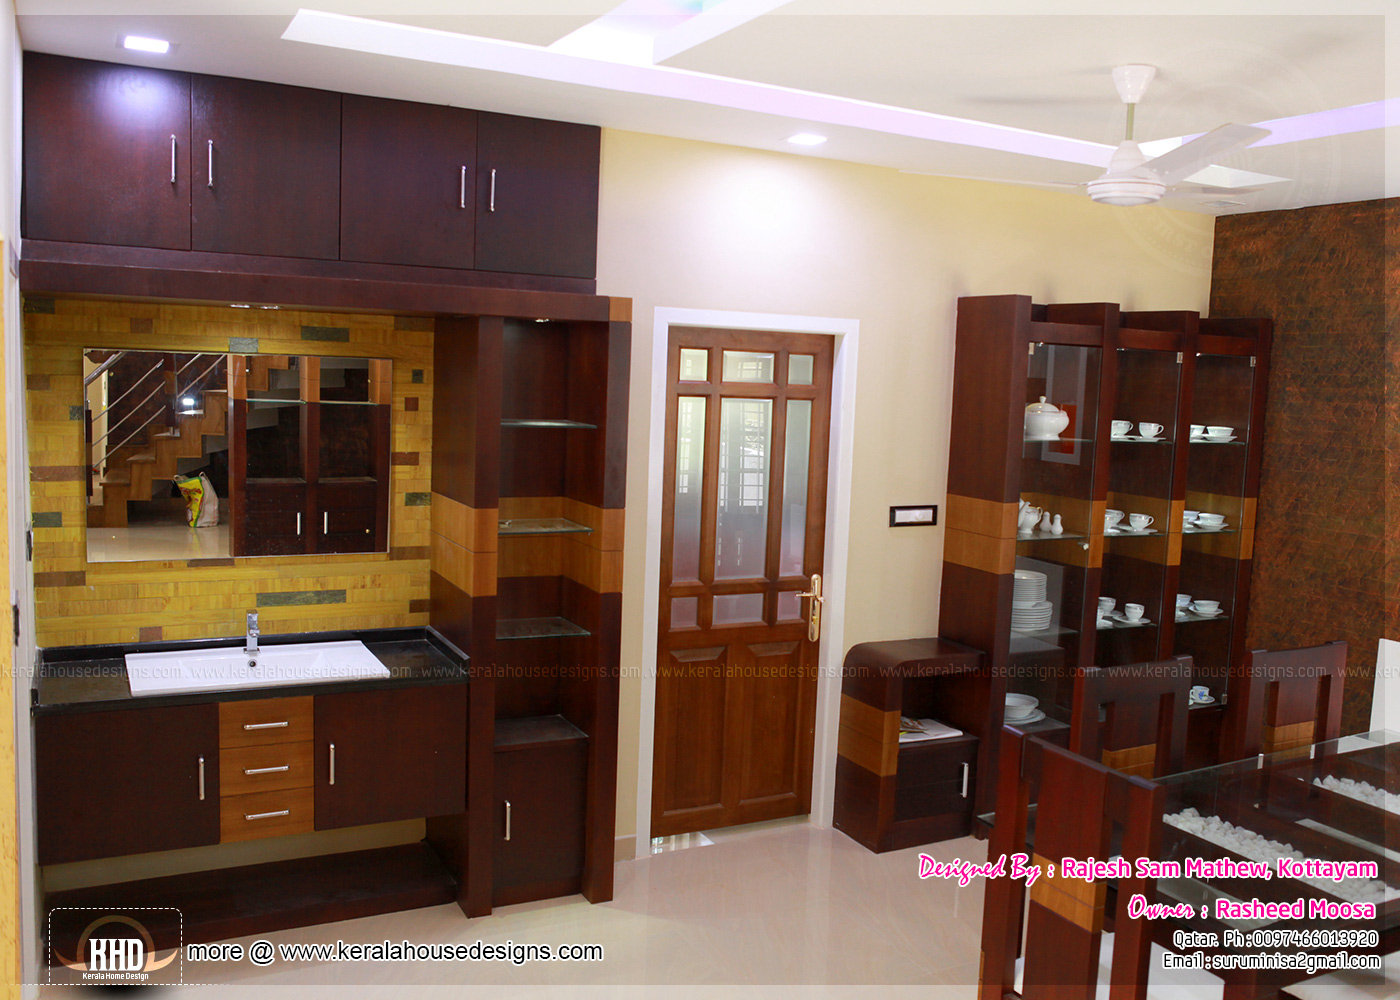 Kerala Interior Design With Photos Kerala Home Design And Floor